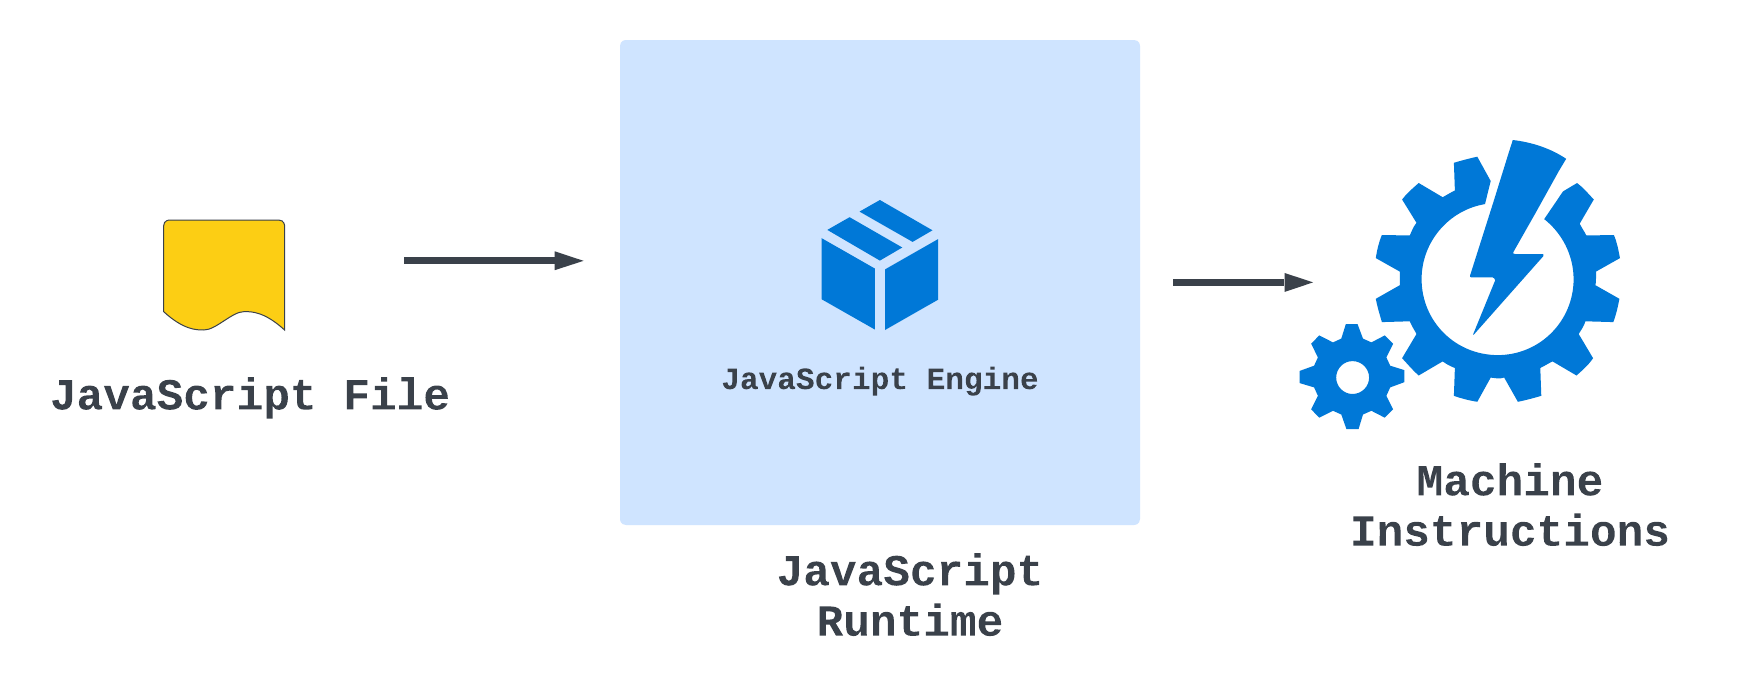 JavaScript Engine inside the Runtime